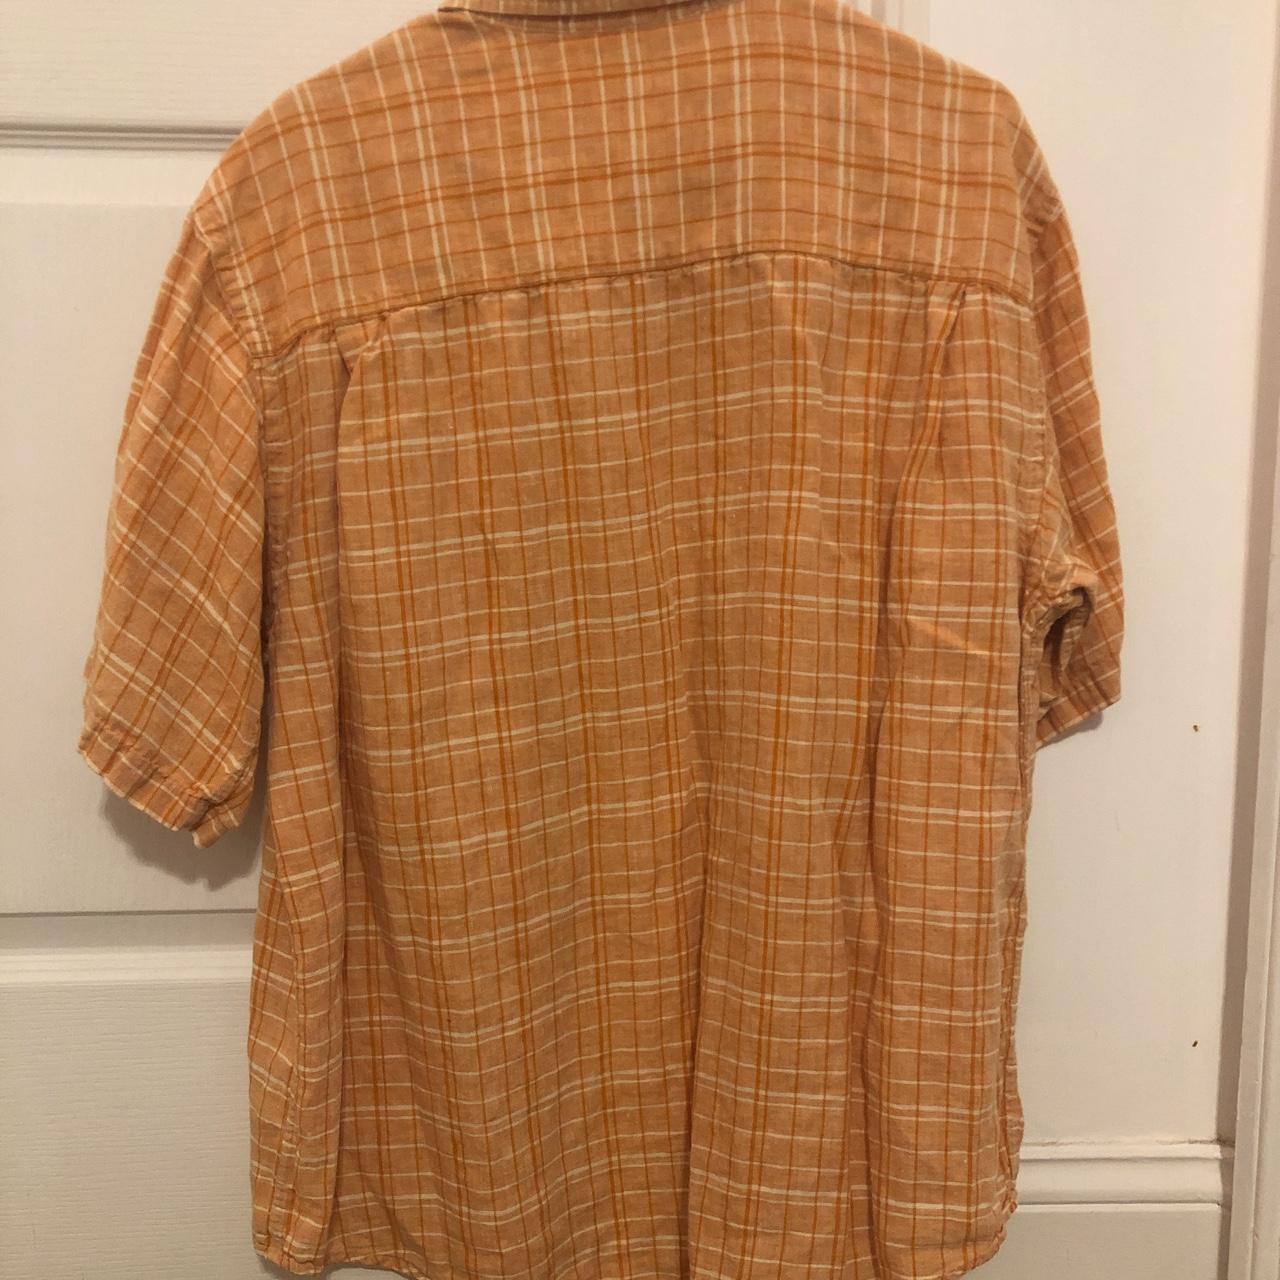 Turnbury orange shirt Size: men’s large #vintage #2000s - Depop